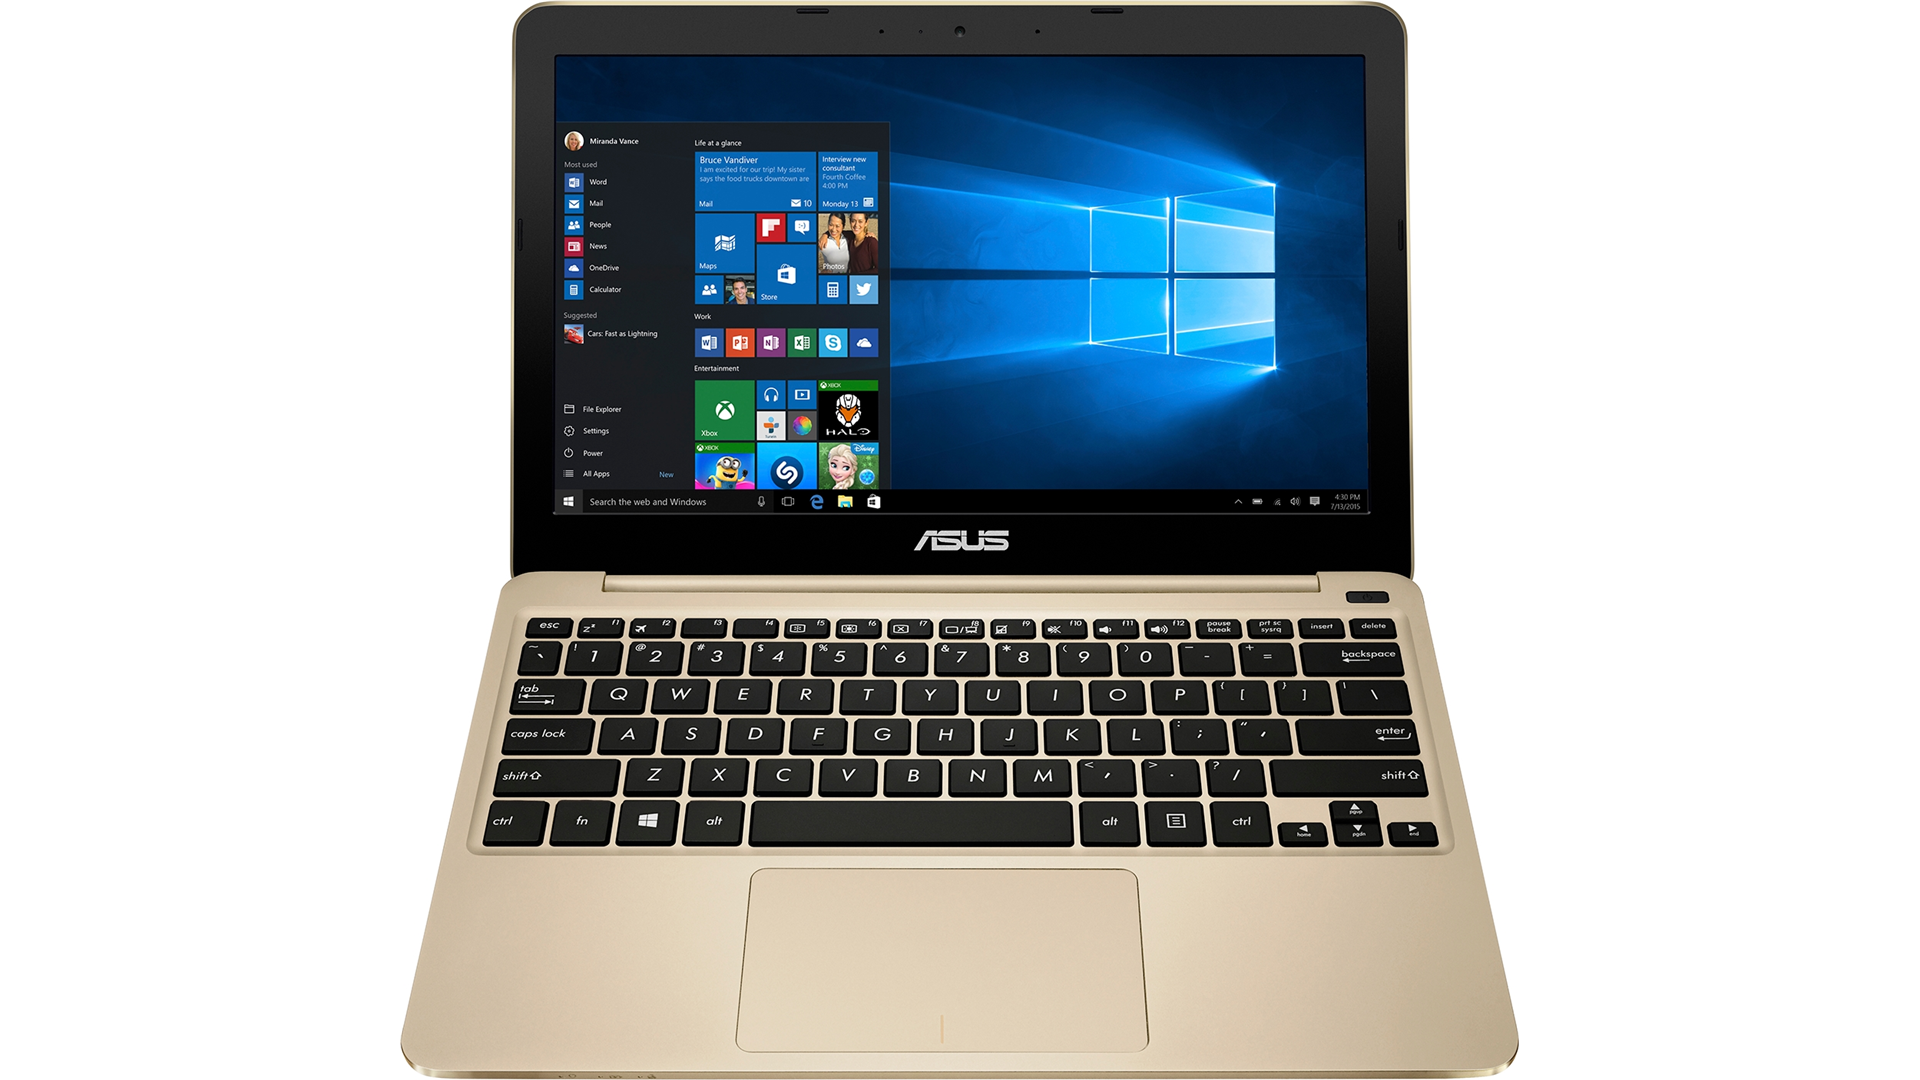 Asus VivoBook E200 Series - Notebookcheck.net External Reviews